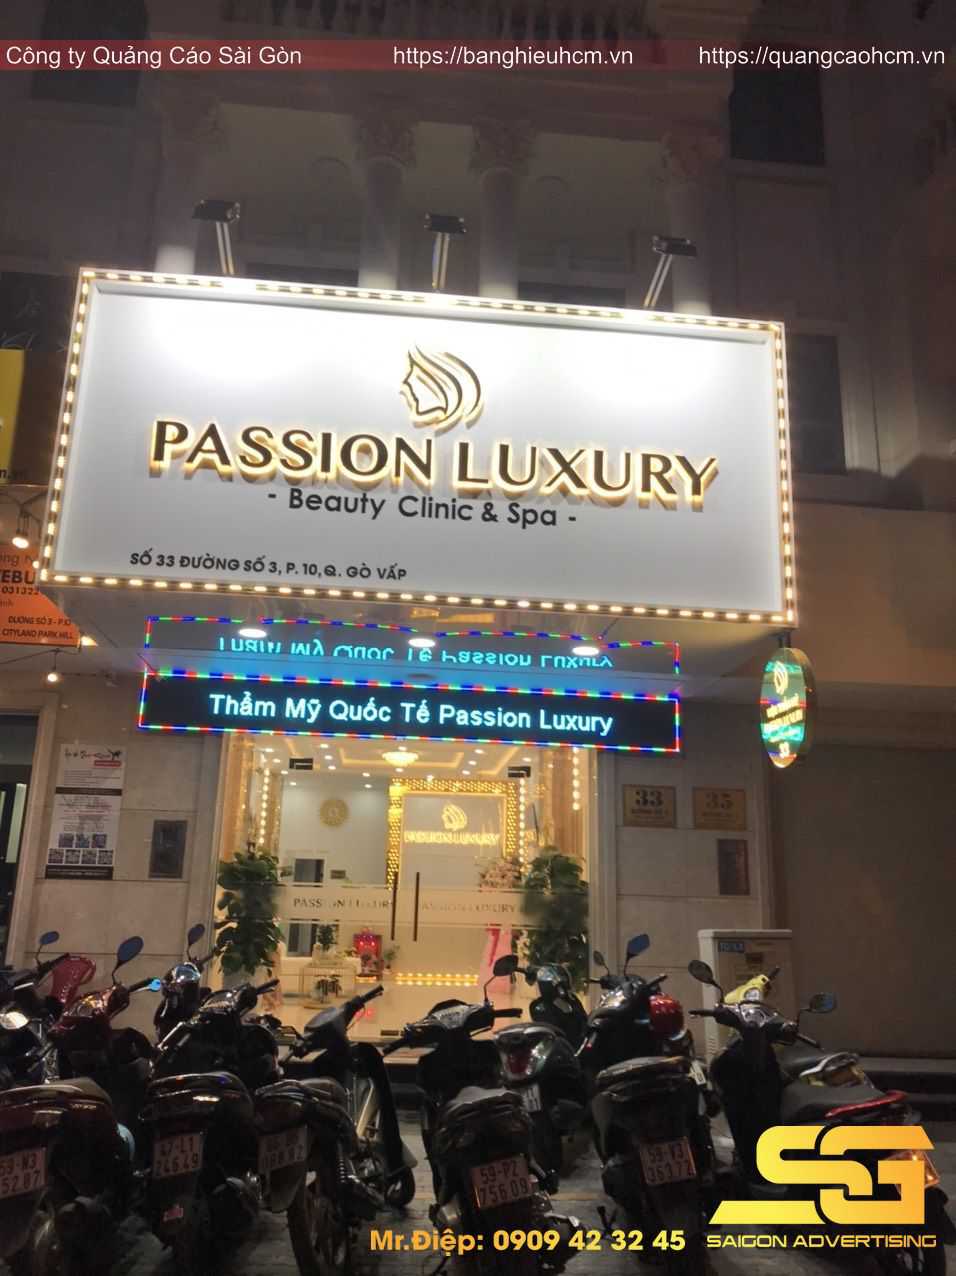 Bảng hiệu spa Passion Luxury